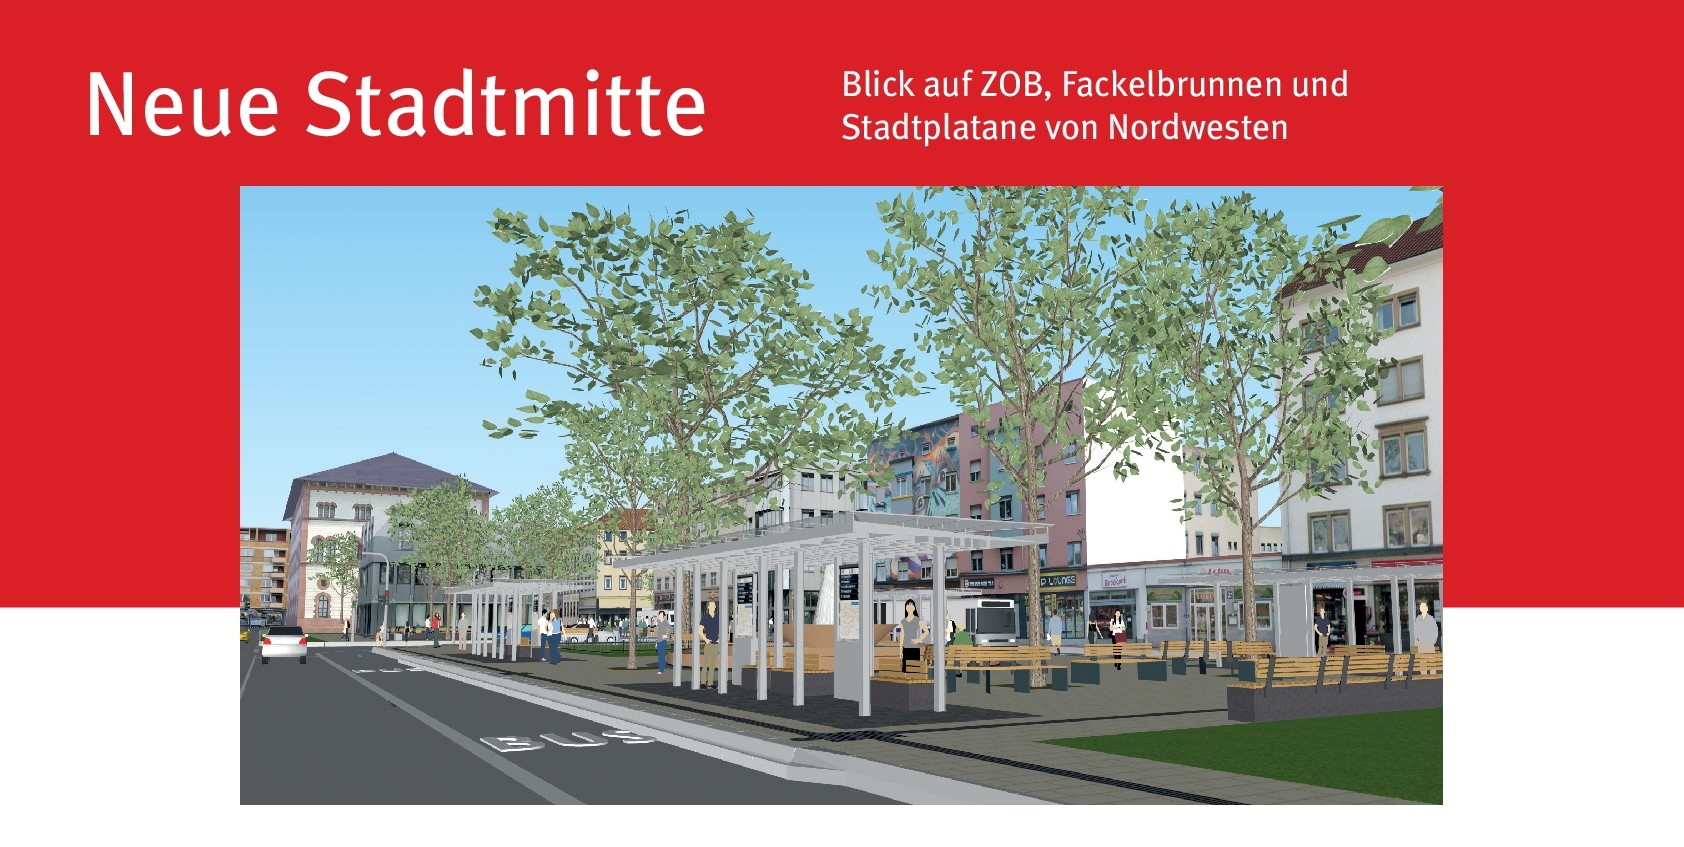 Die neue Stadtmitte Kaiserslautern